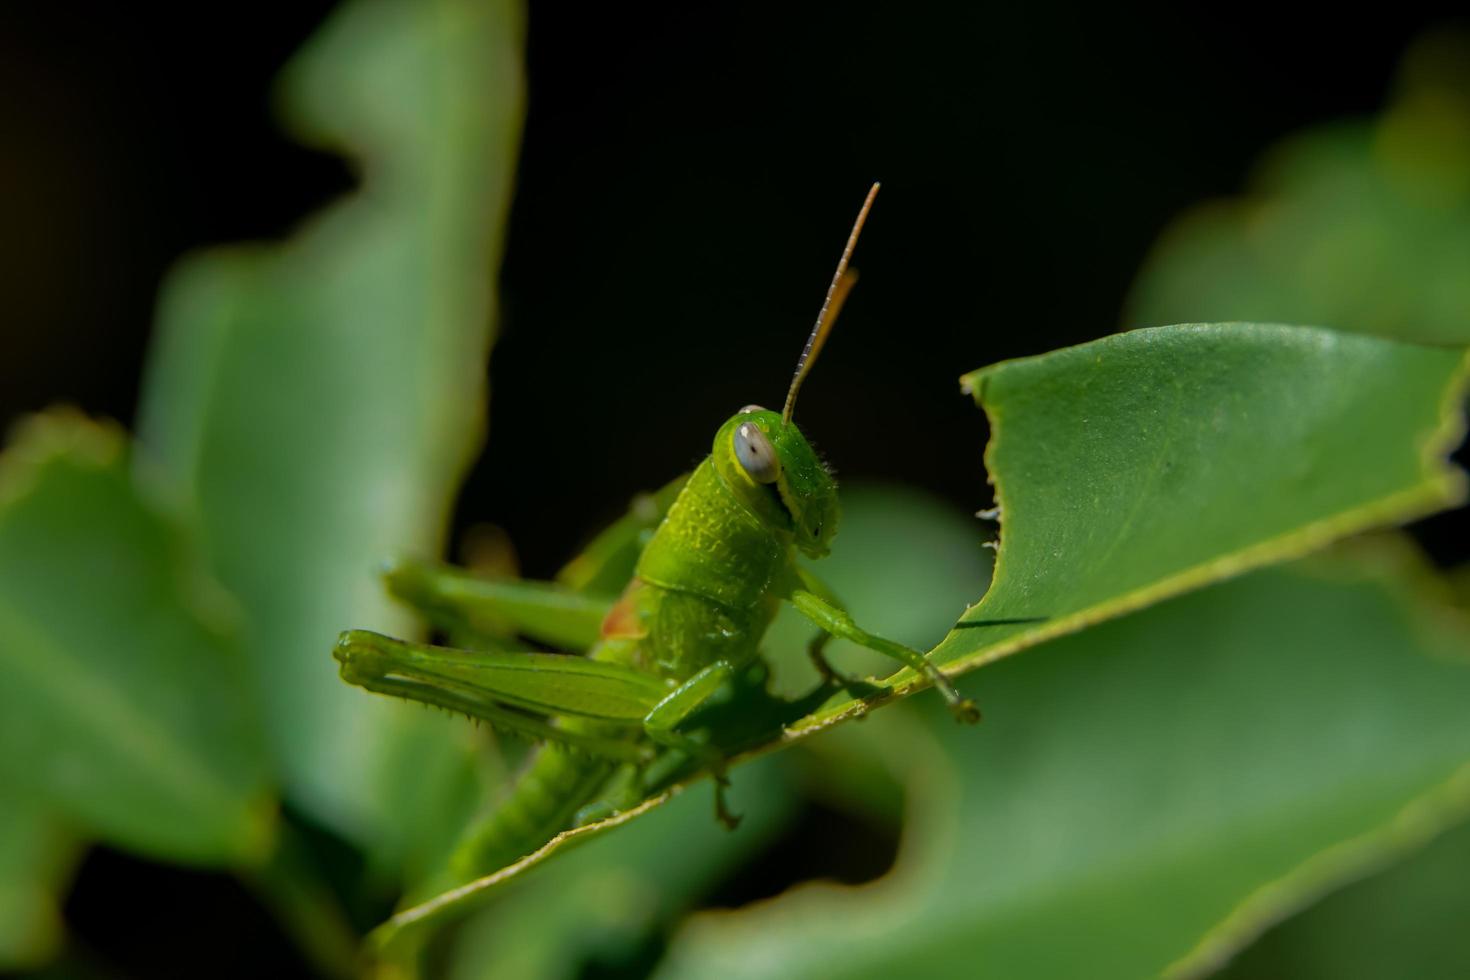 macro photography of a green grasshopper eating an orange leaf, closeup grasshopper photo